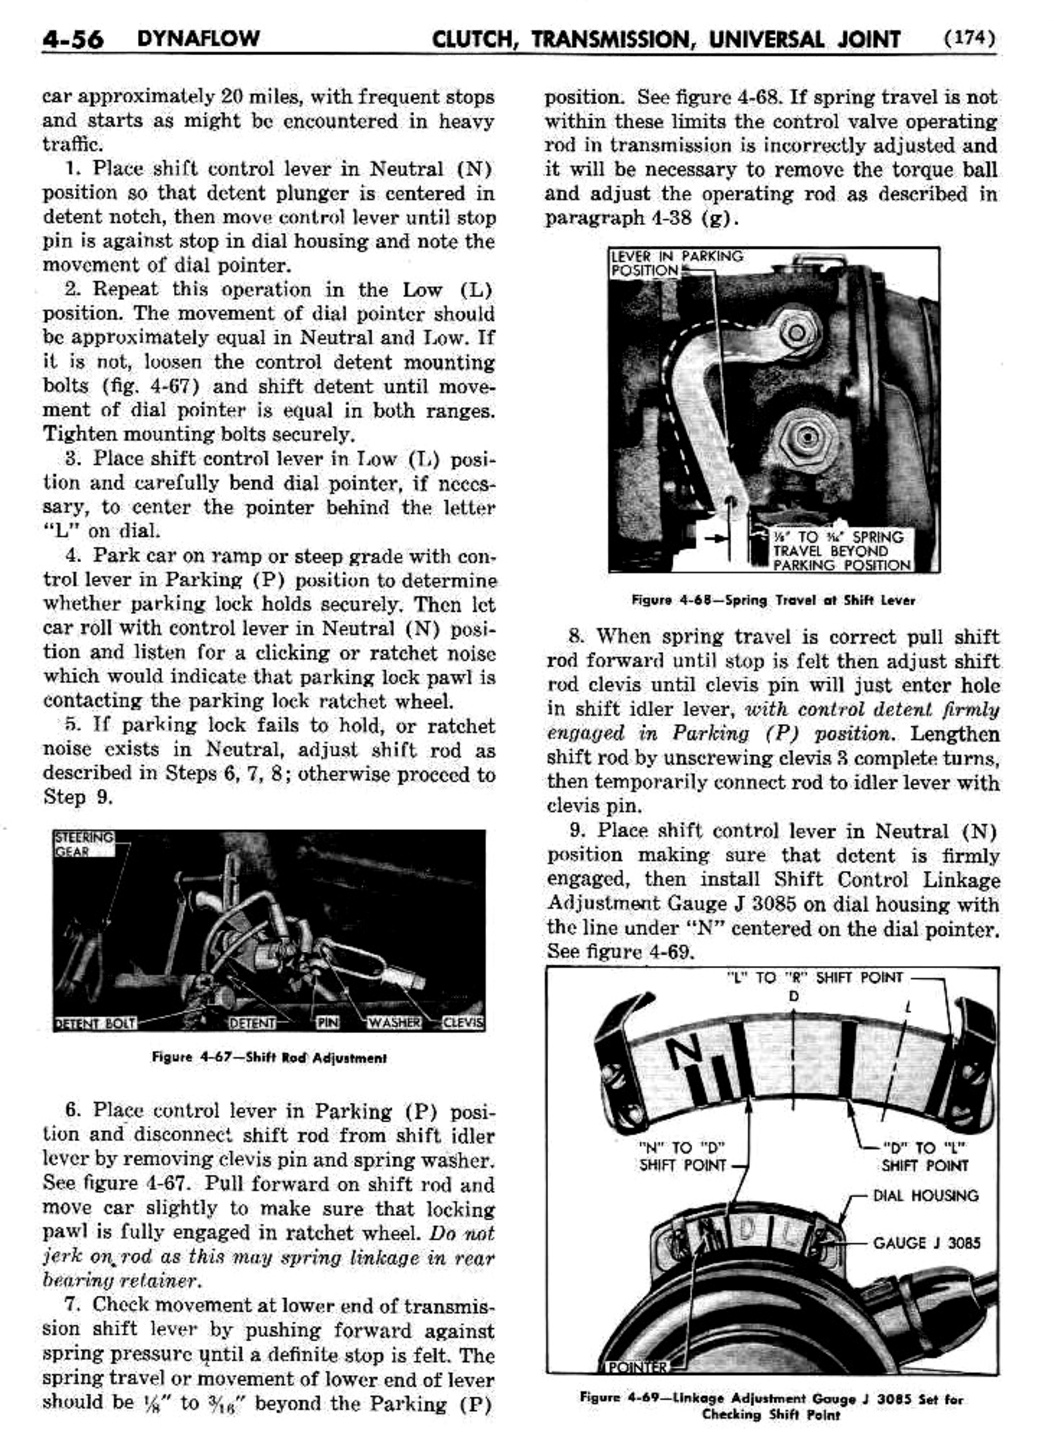 n_05 1951 Buick Shop Manual - Transmission-056-056.jpg